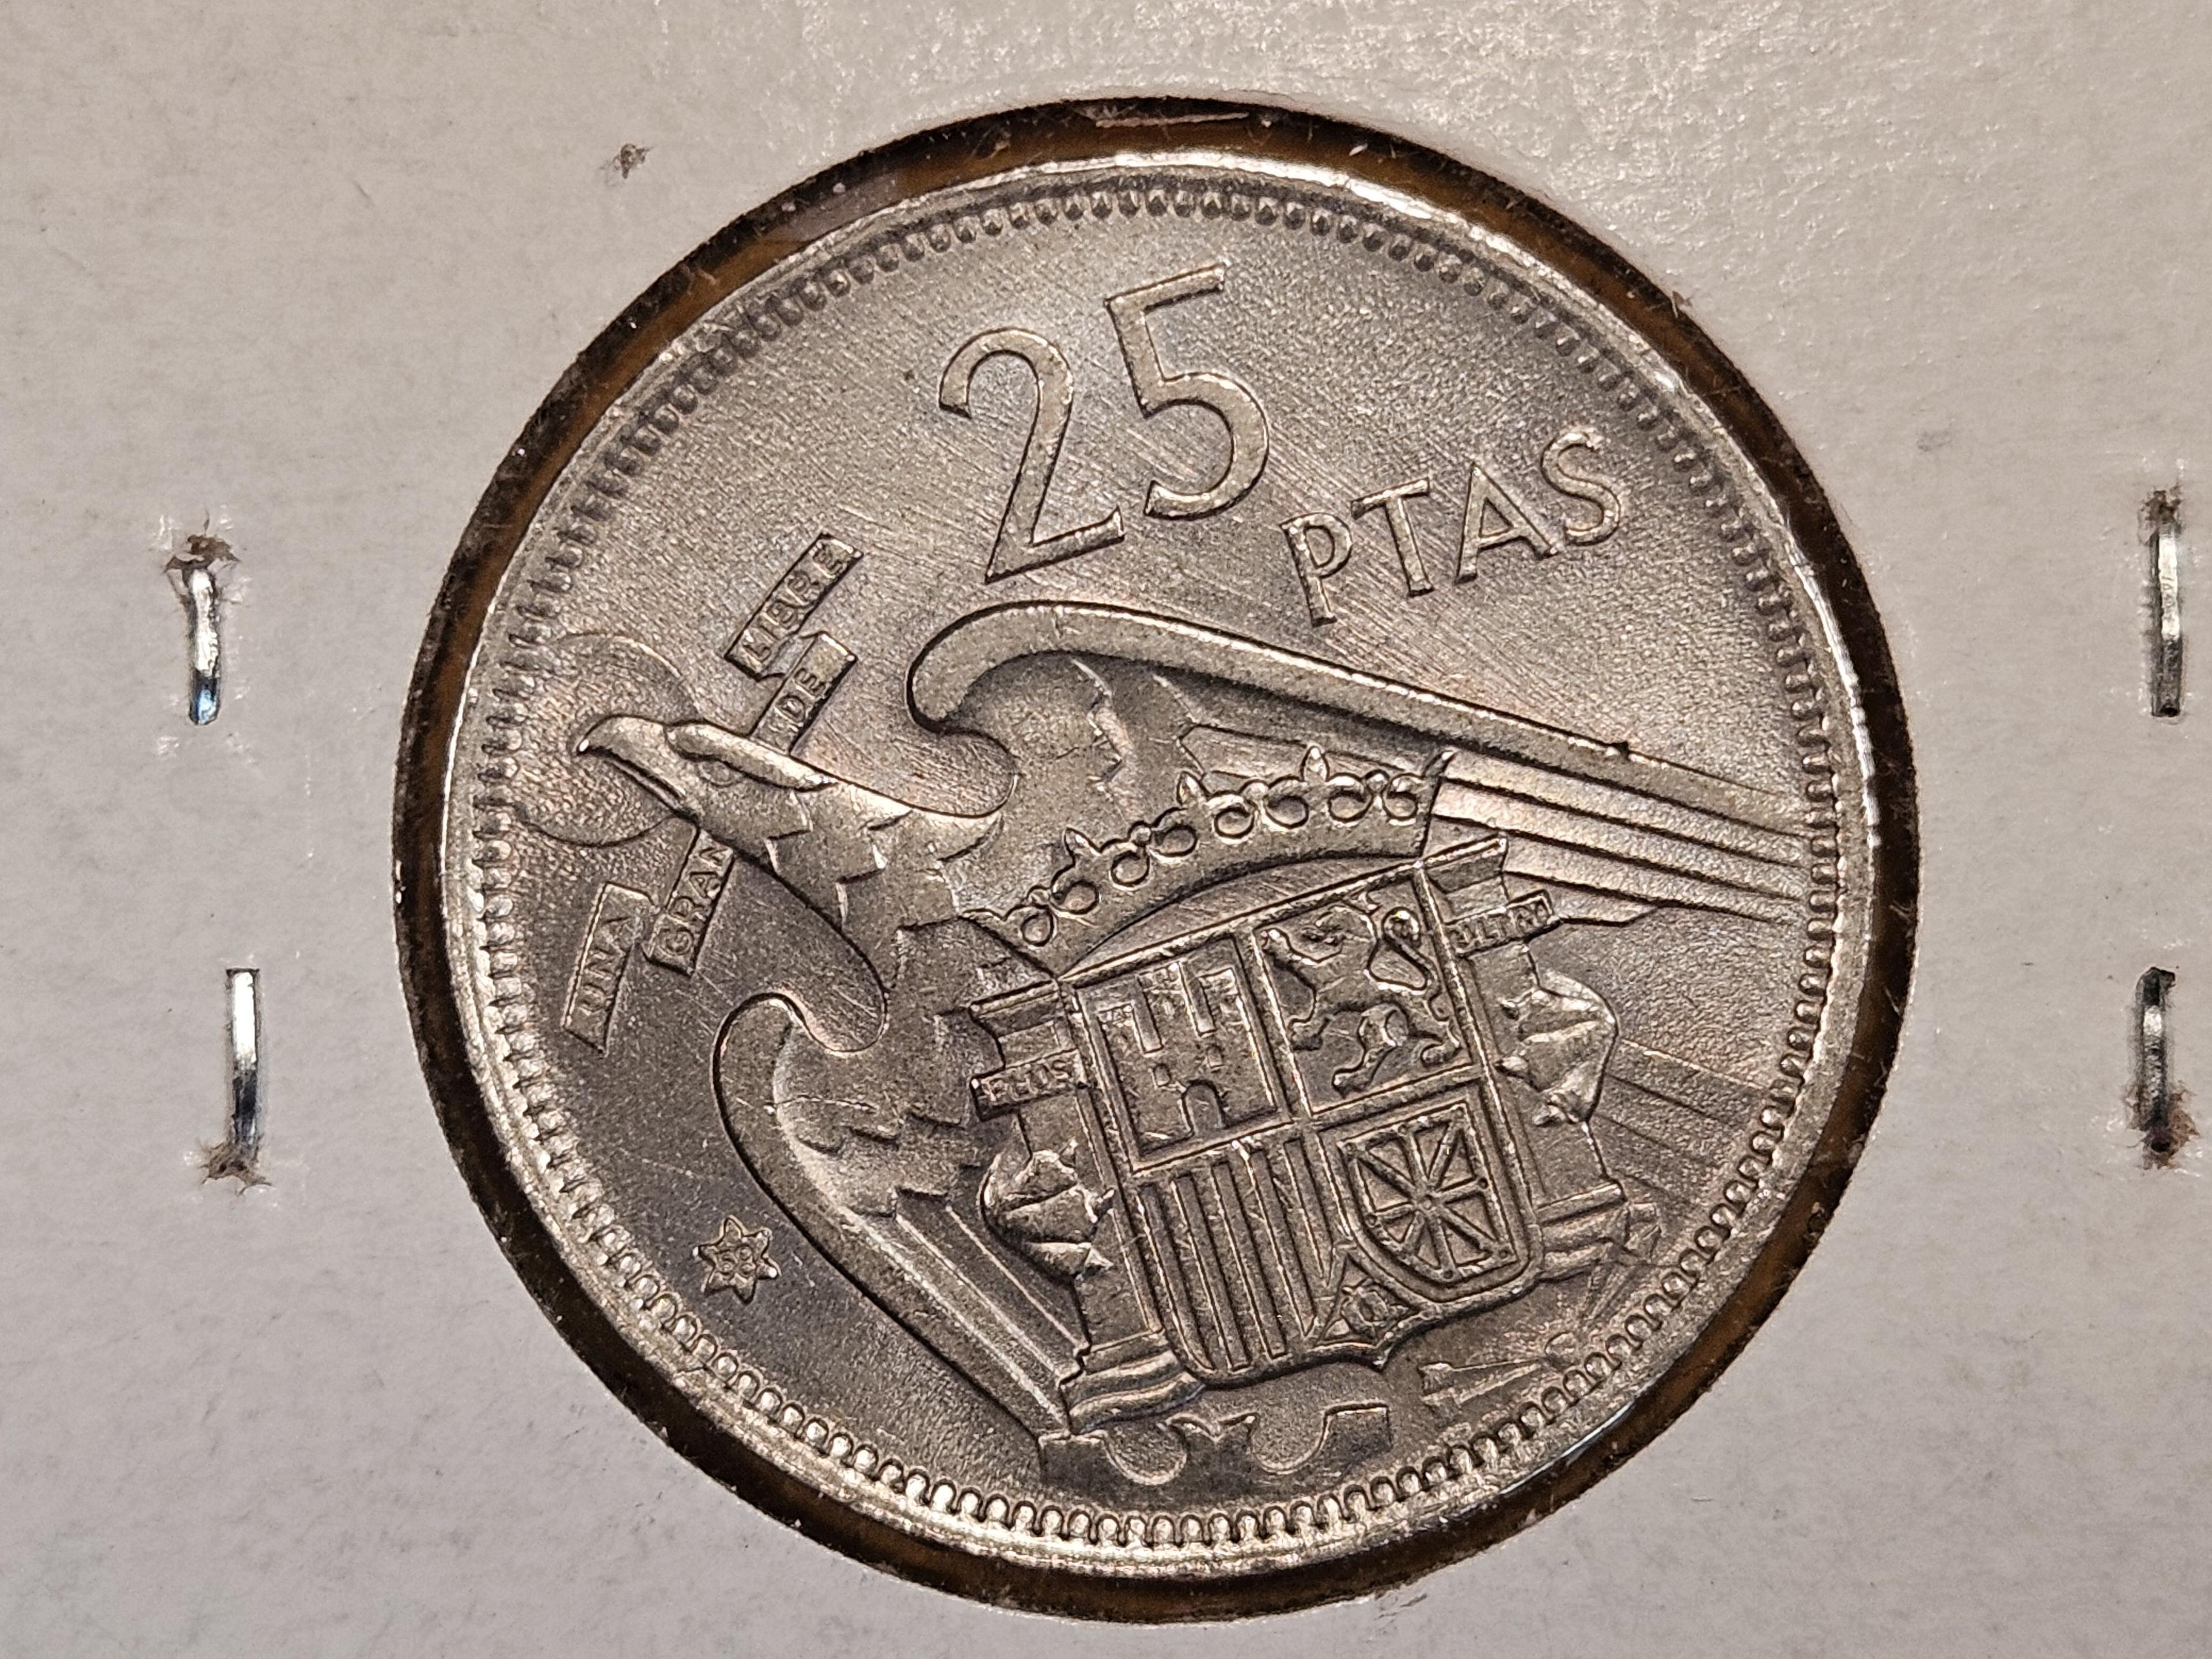 1957 (58) Spain 25 pesetas